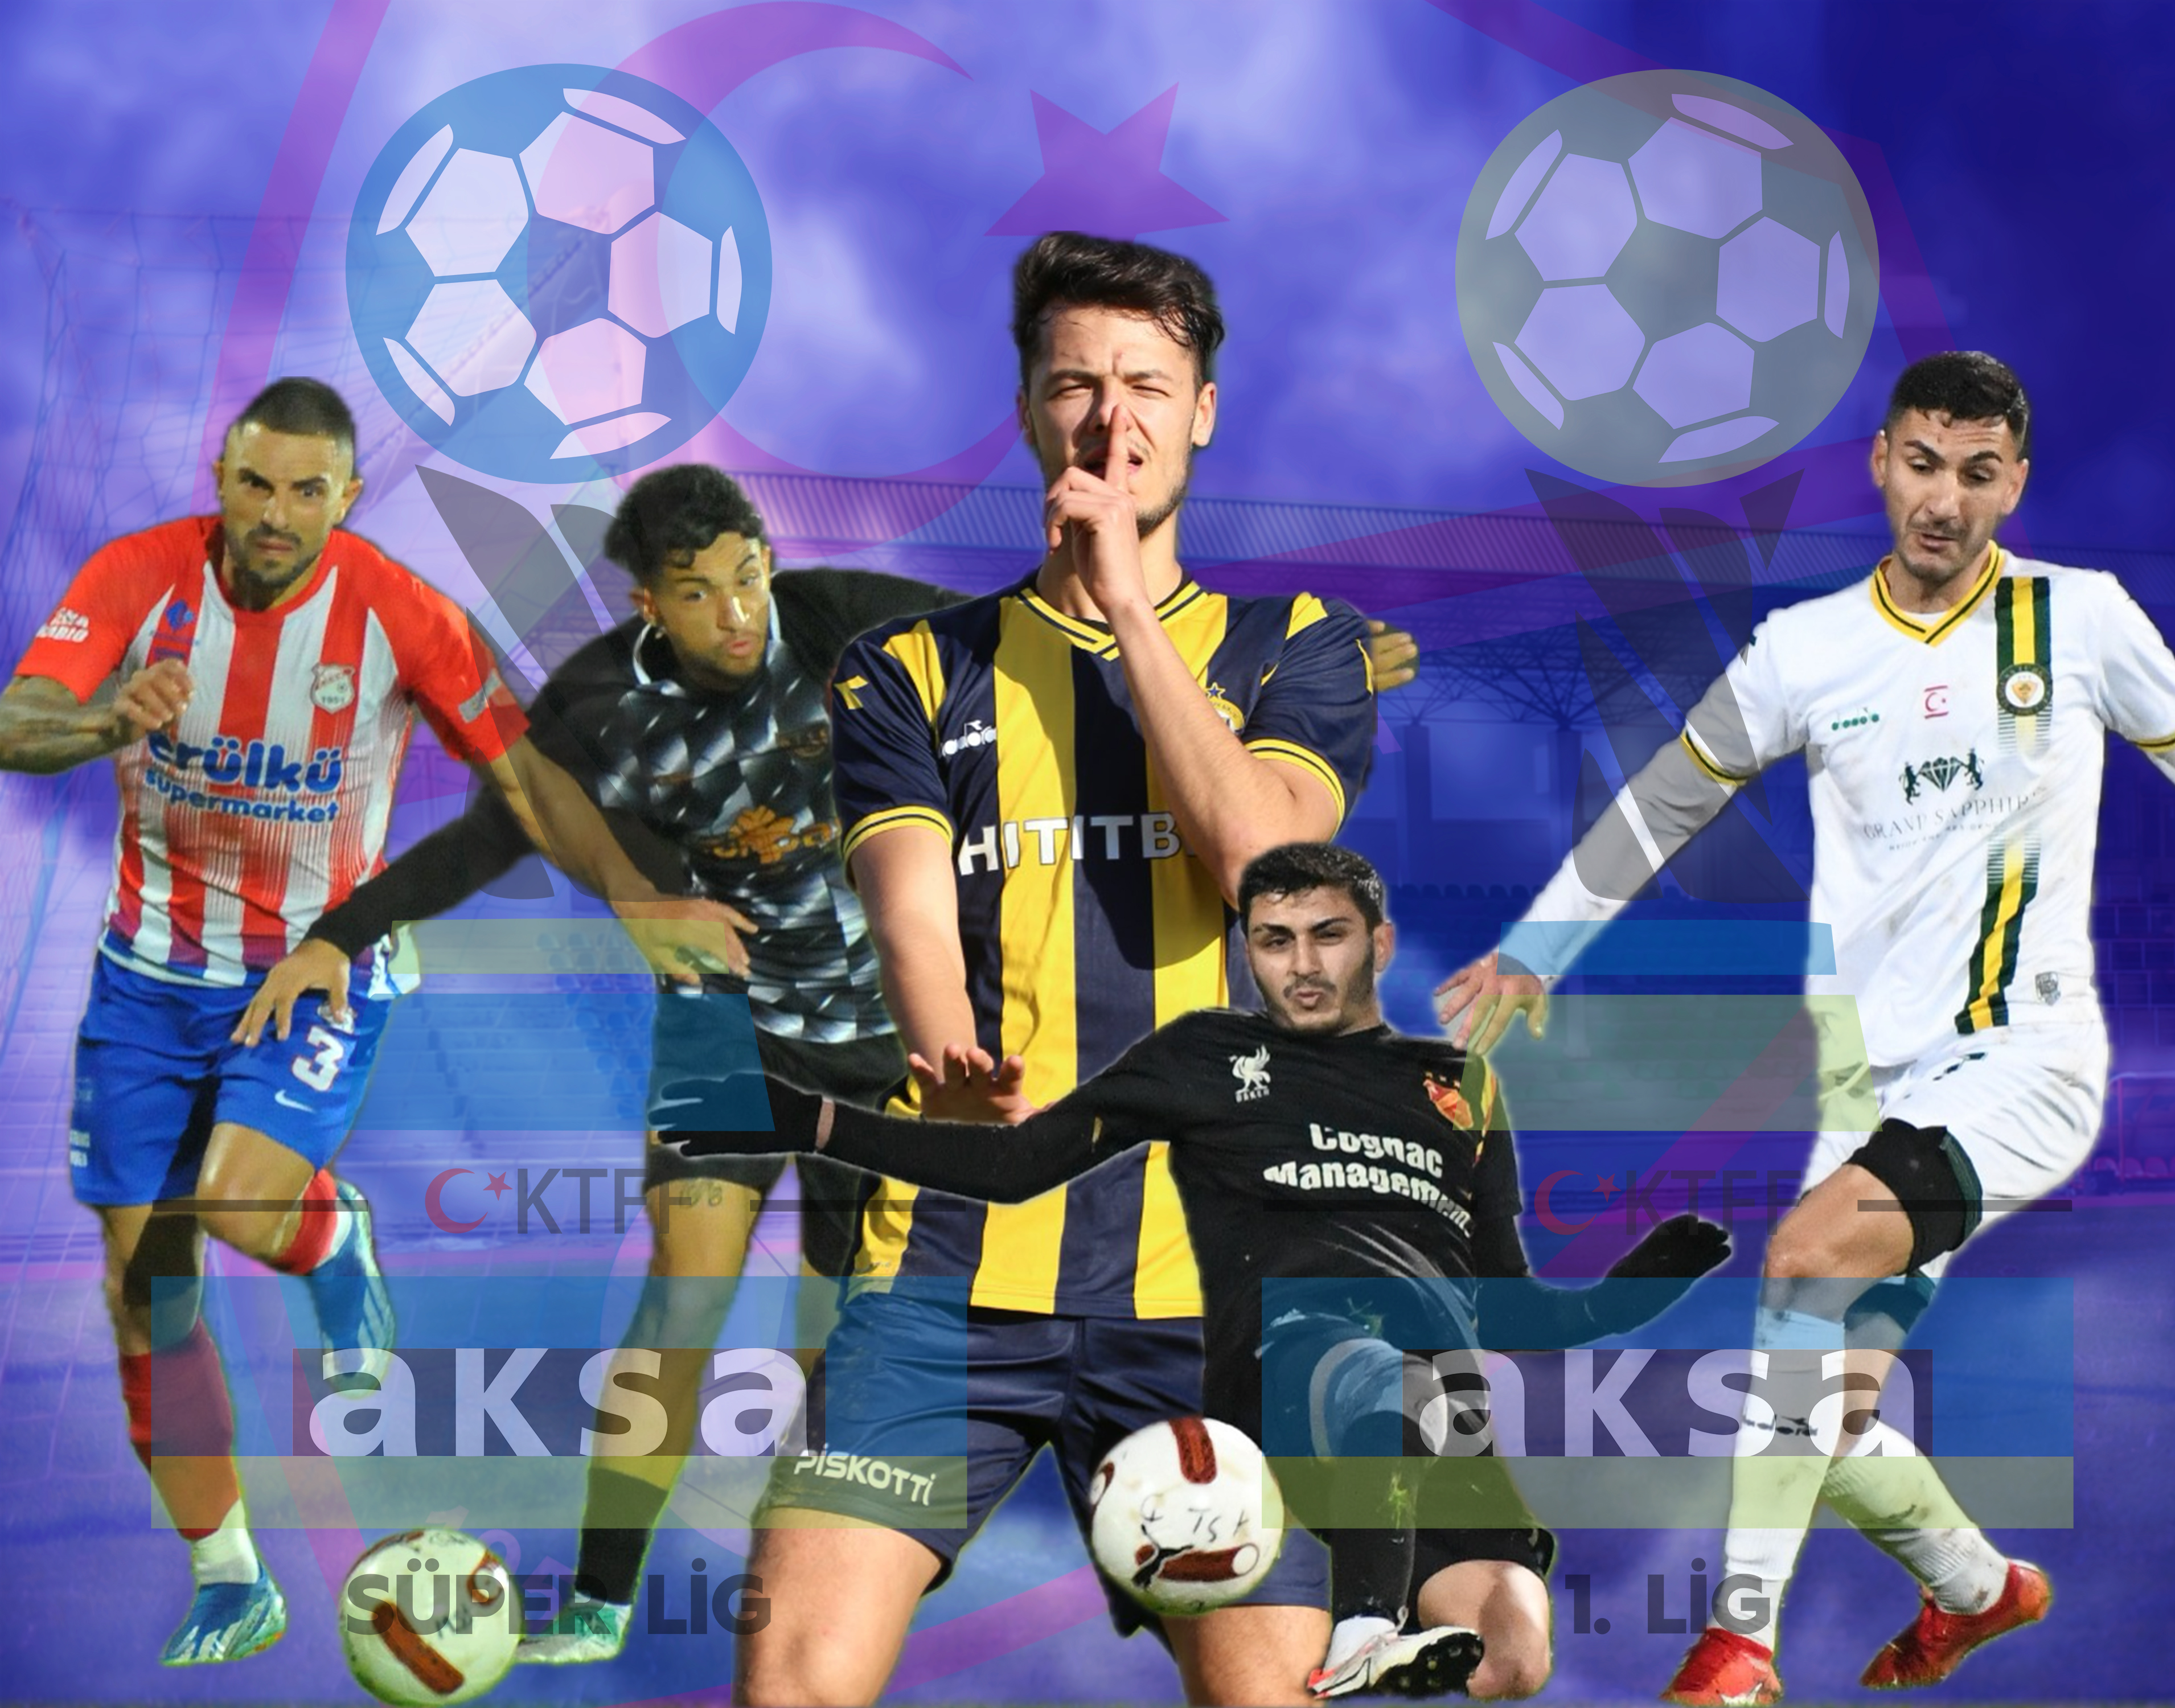 AKSA Süper Lig ve AKSA 1.Lig Play-Out 3.hafta programı